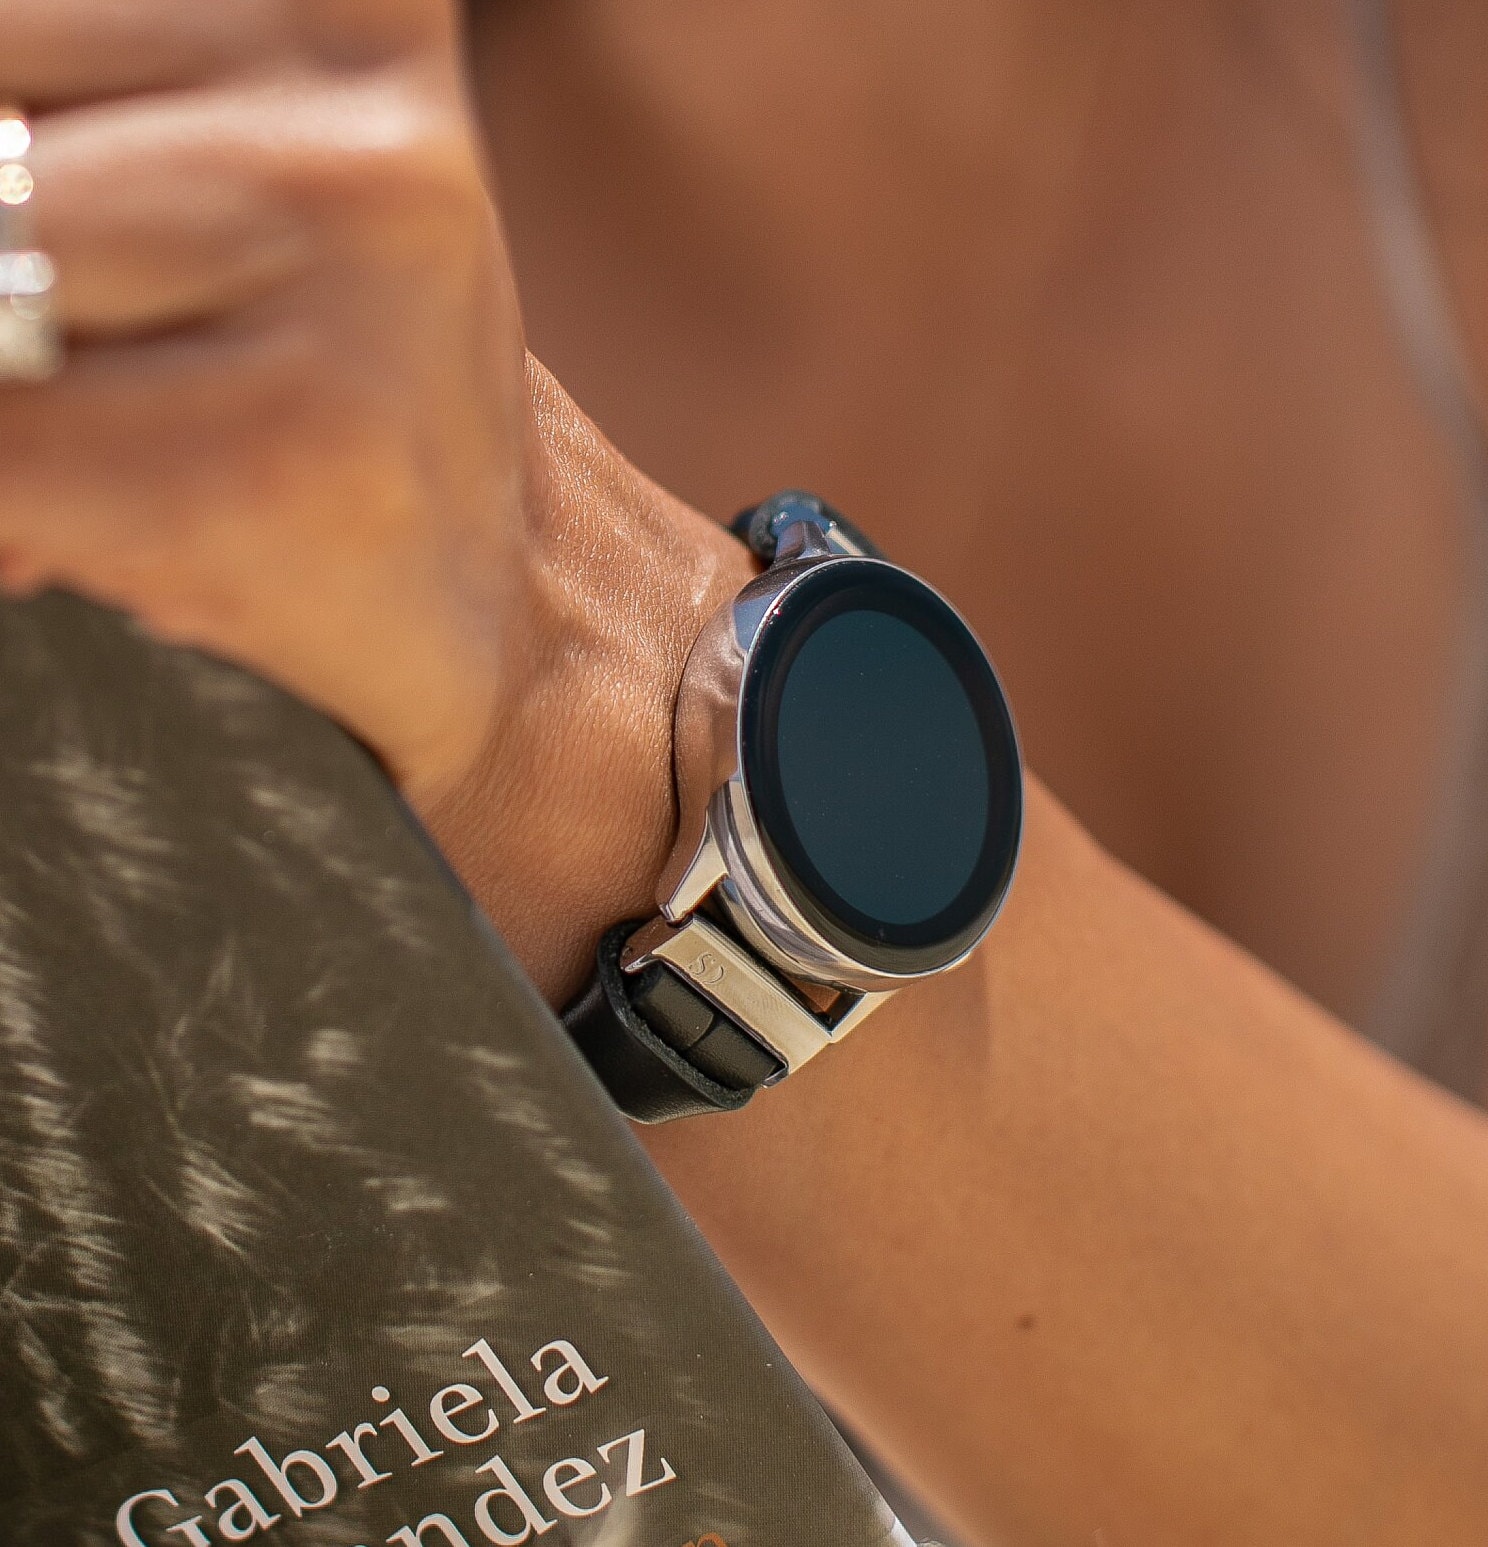 Samsung Galaxy Watch 4 Leather Bracelet 40mm 44mm Slim Black & Silver  Galaxy Watch 4 Classic Band 42mm 46mm Leather Watch Wristband